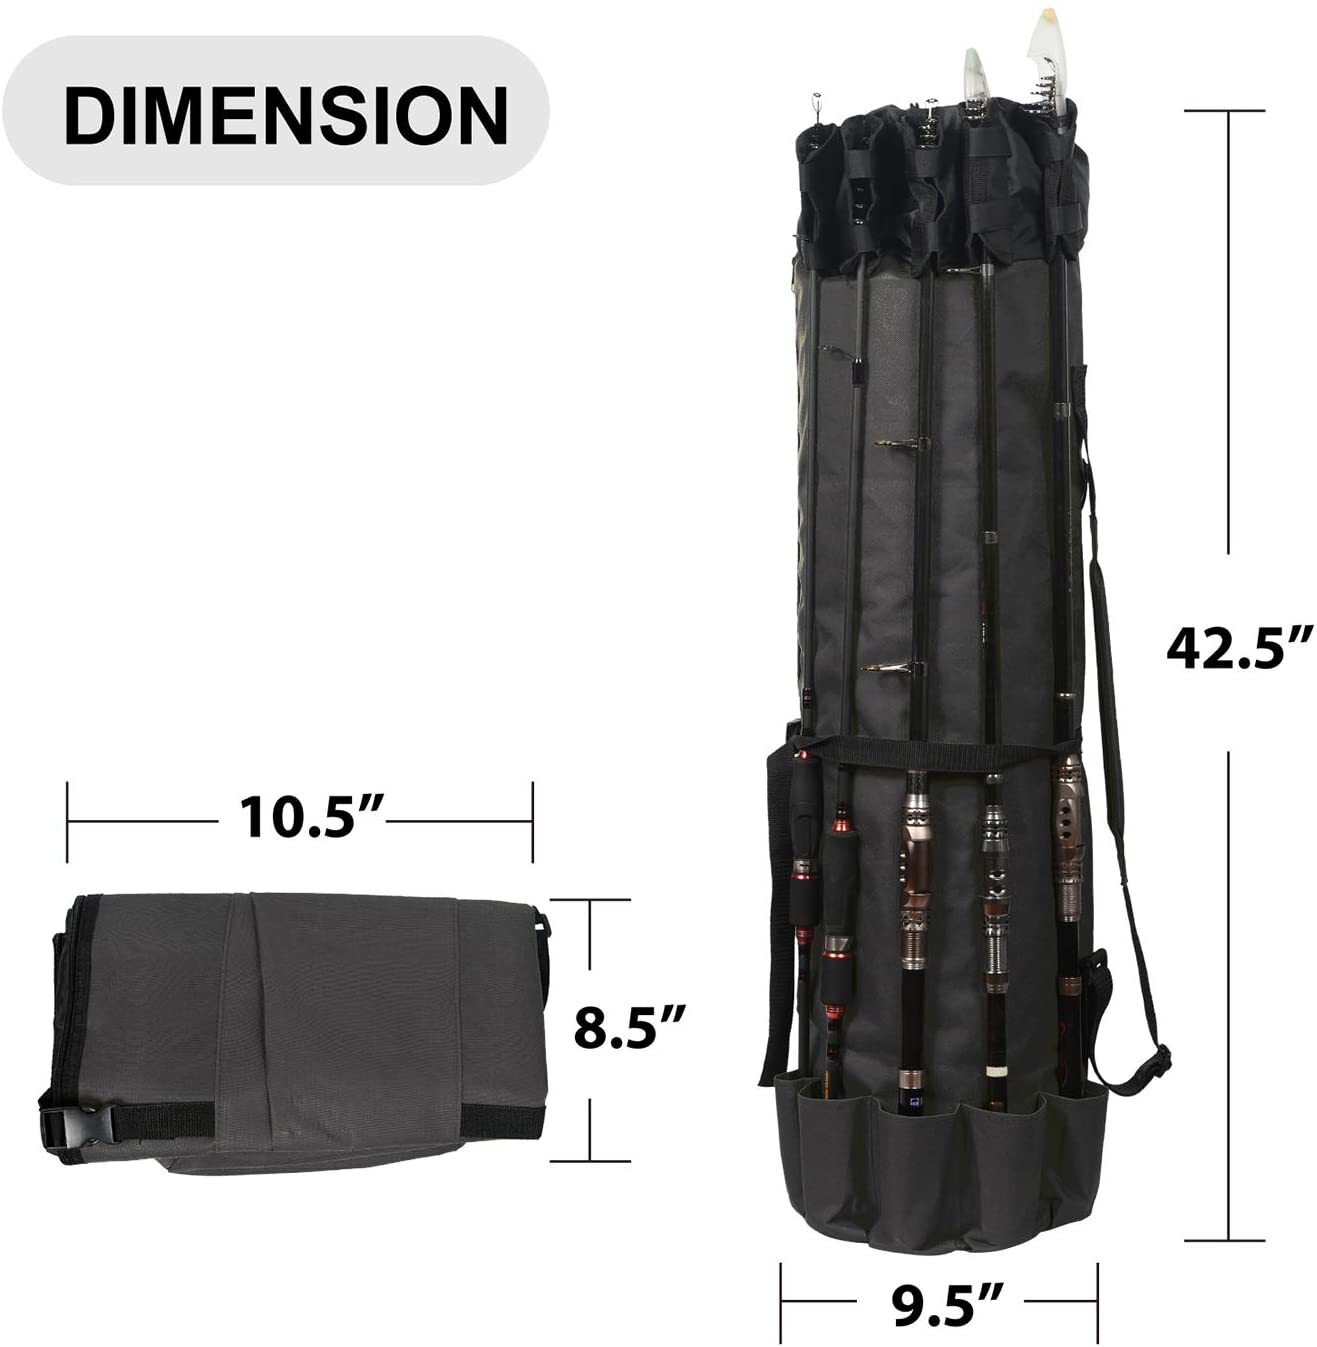 LEADALLWAY Portable Fishing Rod Bag, Durable Folding Oxford Fabric